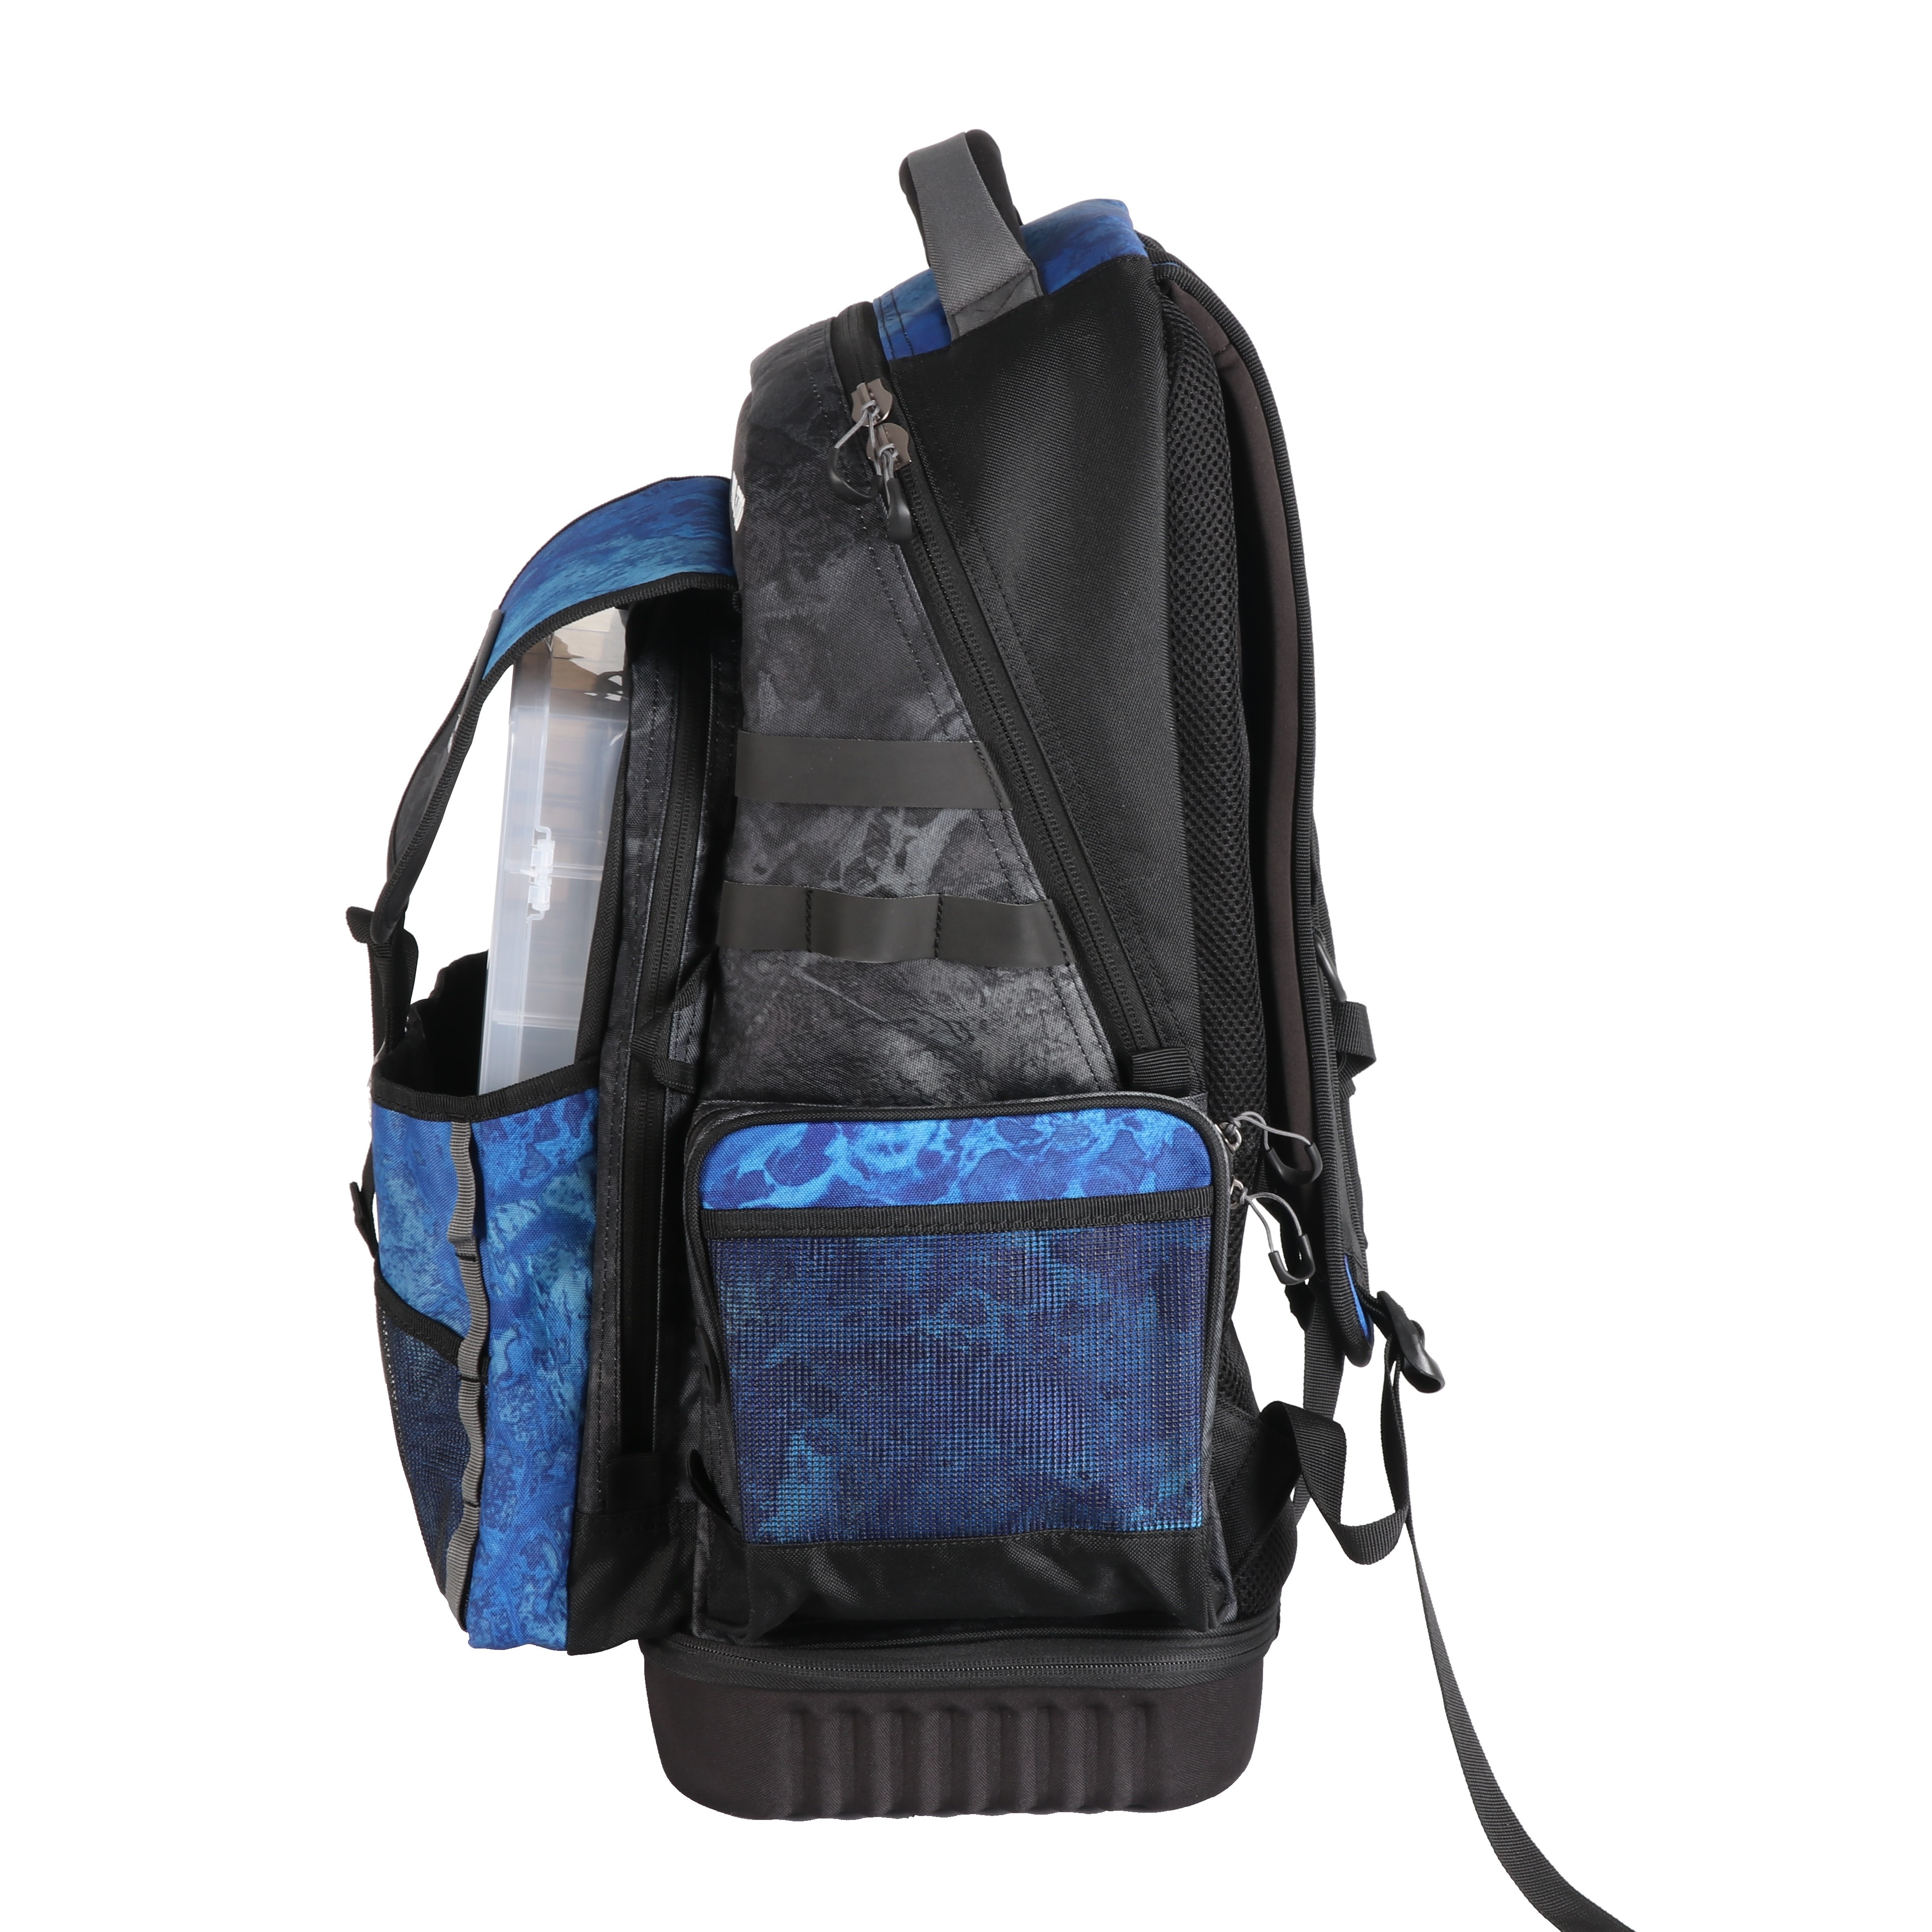 Realtree Large Pro Fishing Tackle Box Storage Backpack, Blue, Adult Unisex, Polyester - image 4 of 8